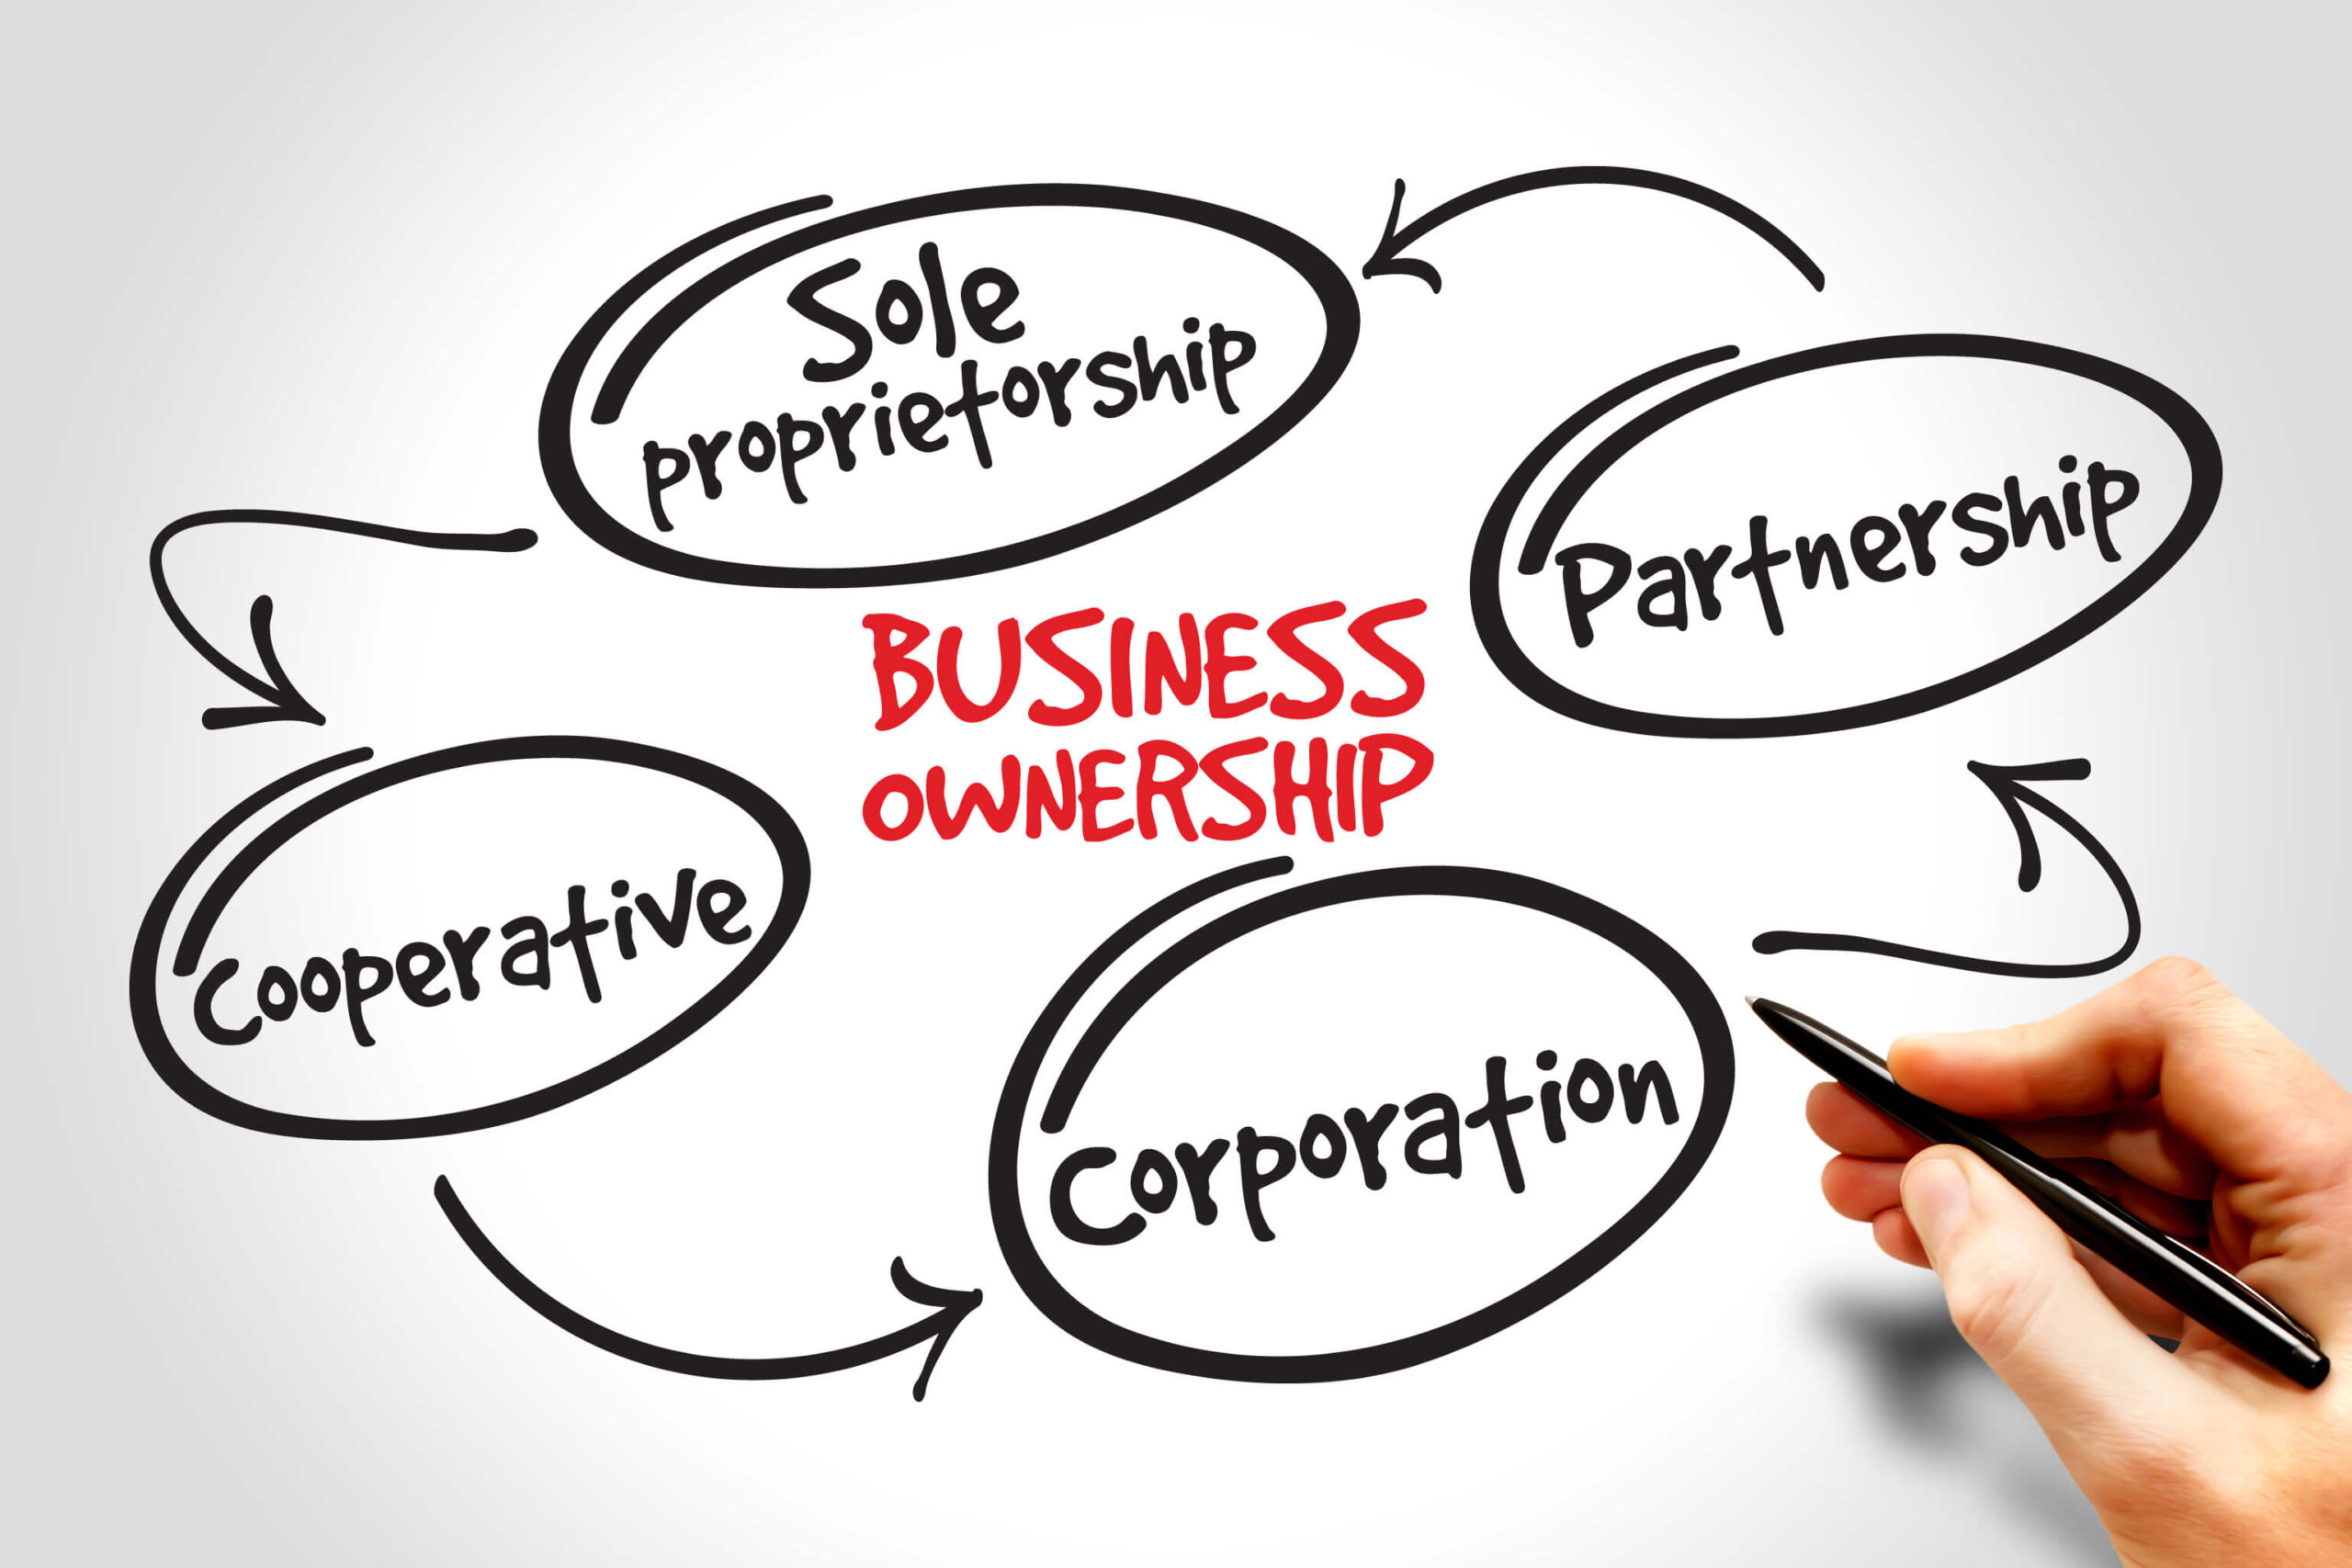 Business Structure—Sole Proprietorship or Partnership